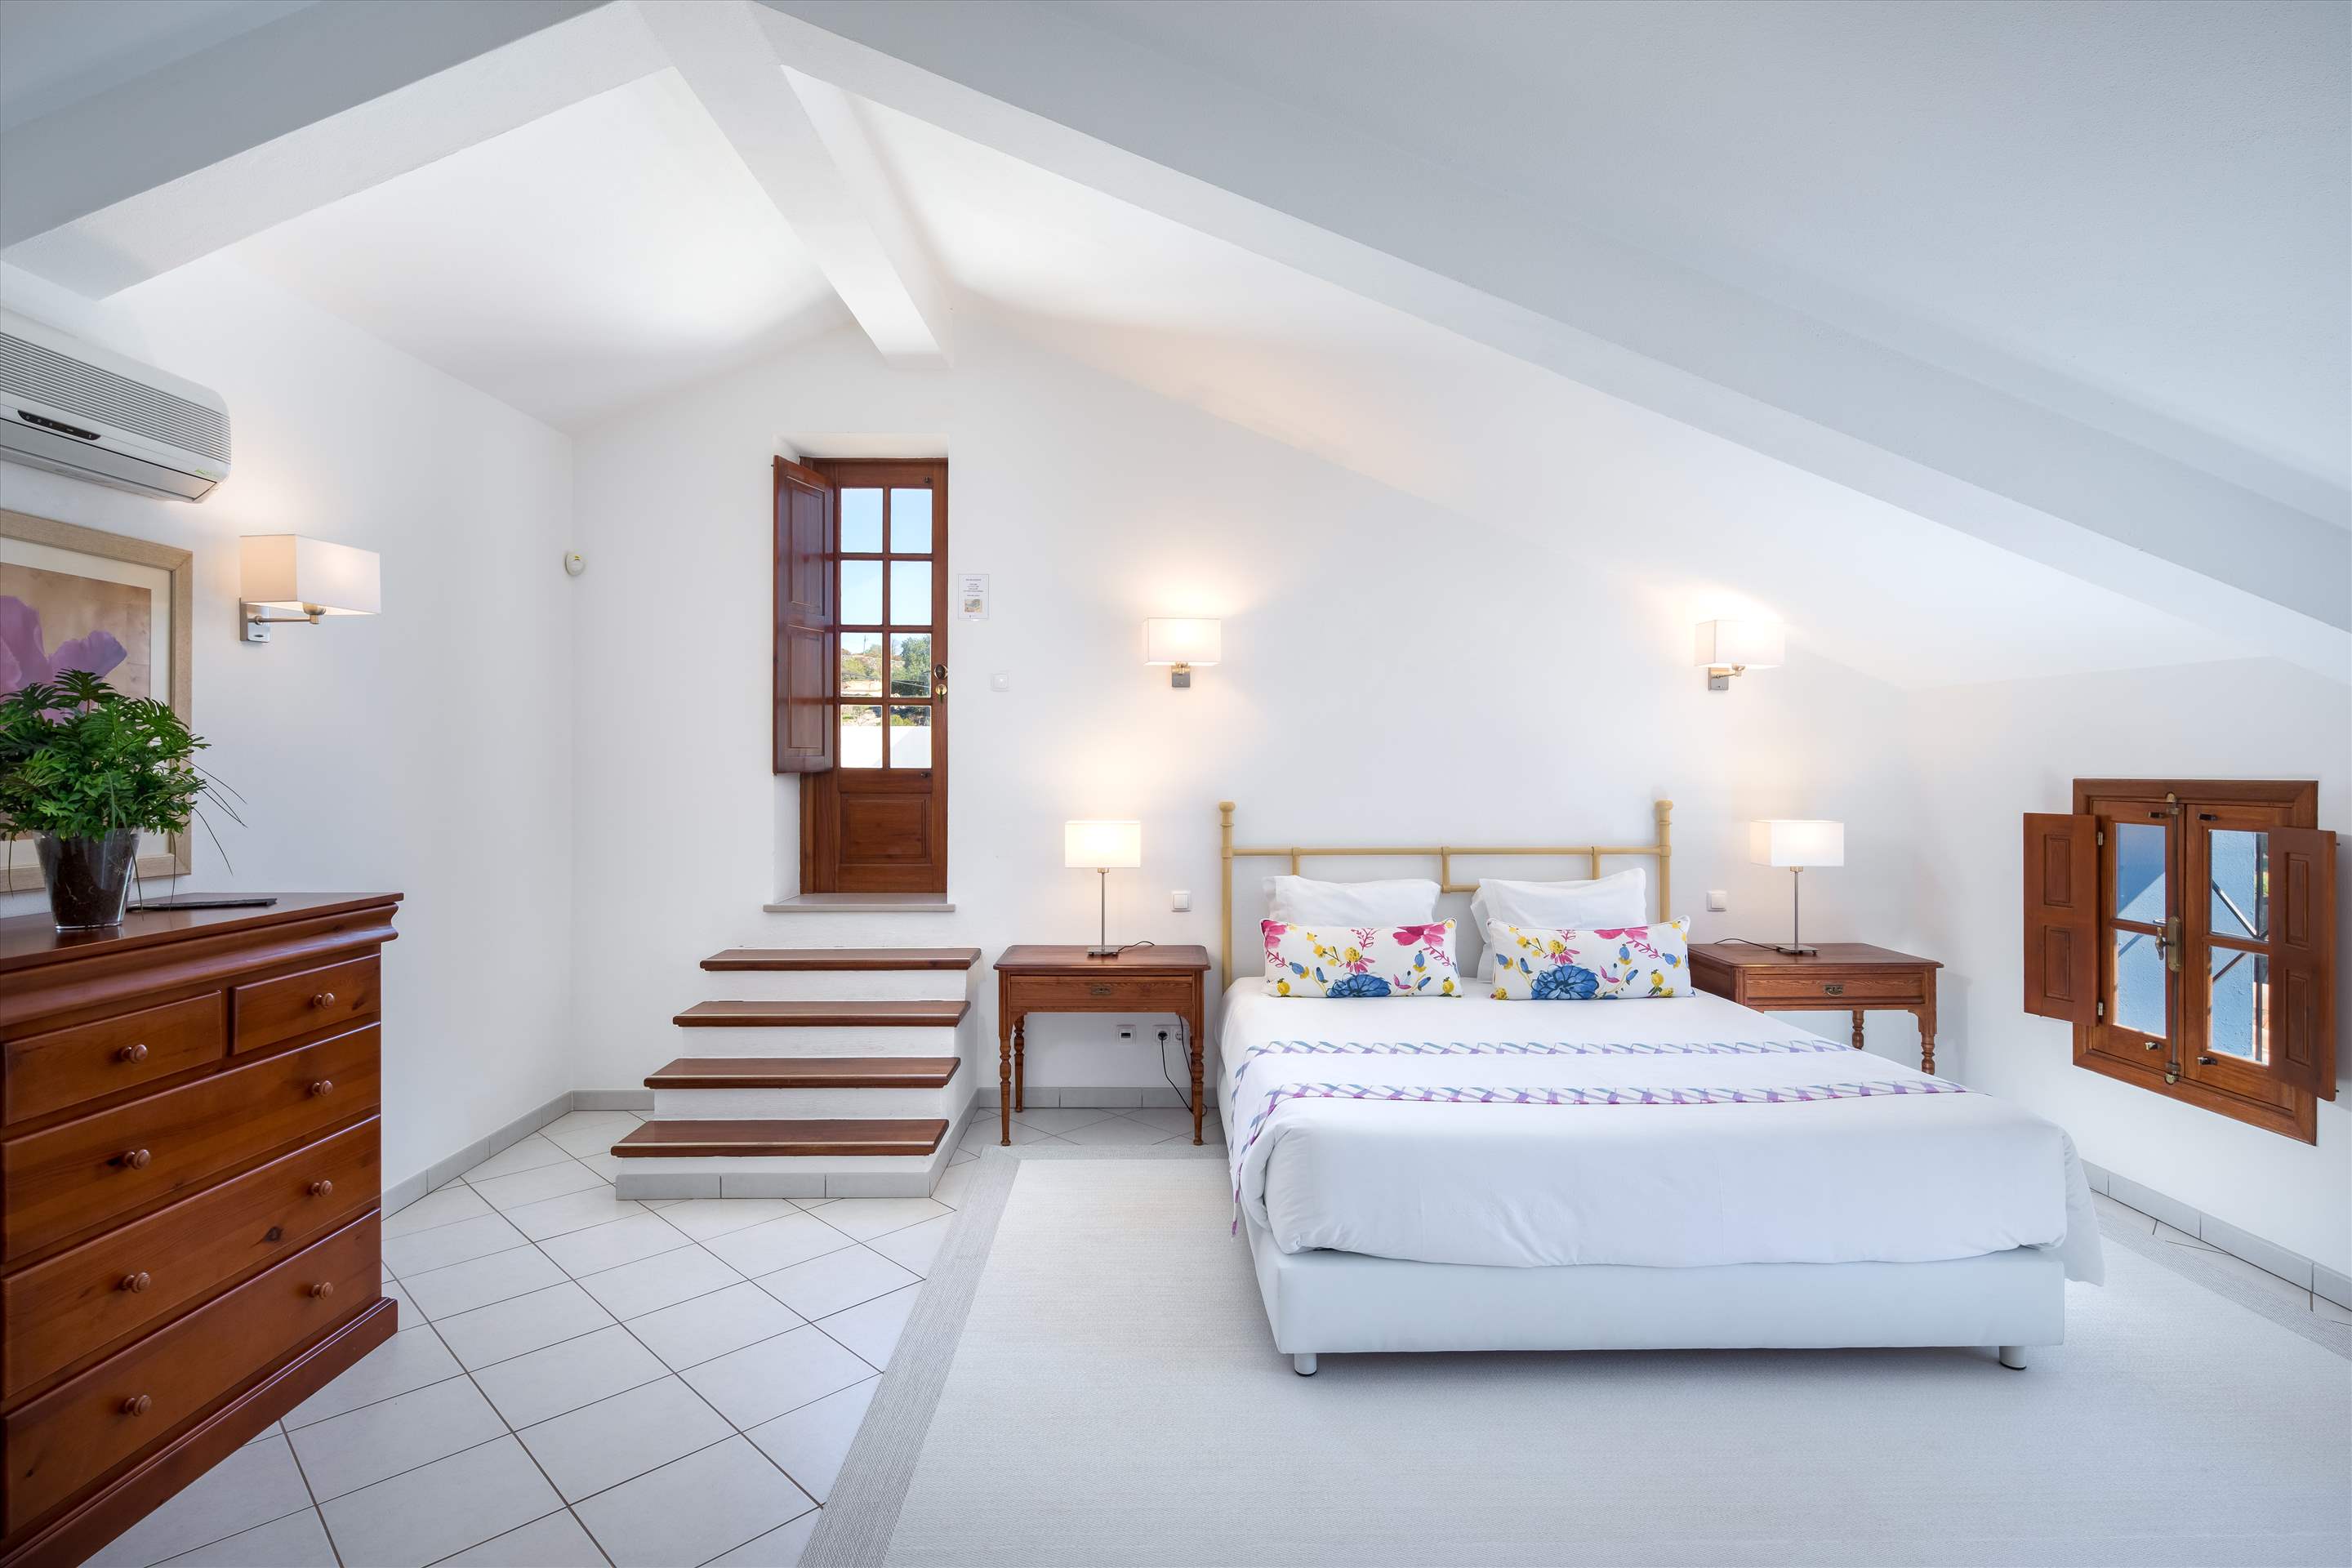 Casa do Ingles, up to 6 persons, 3 bedroom villa in Vilamoura Area, Algarve Photo #10